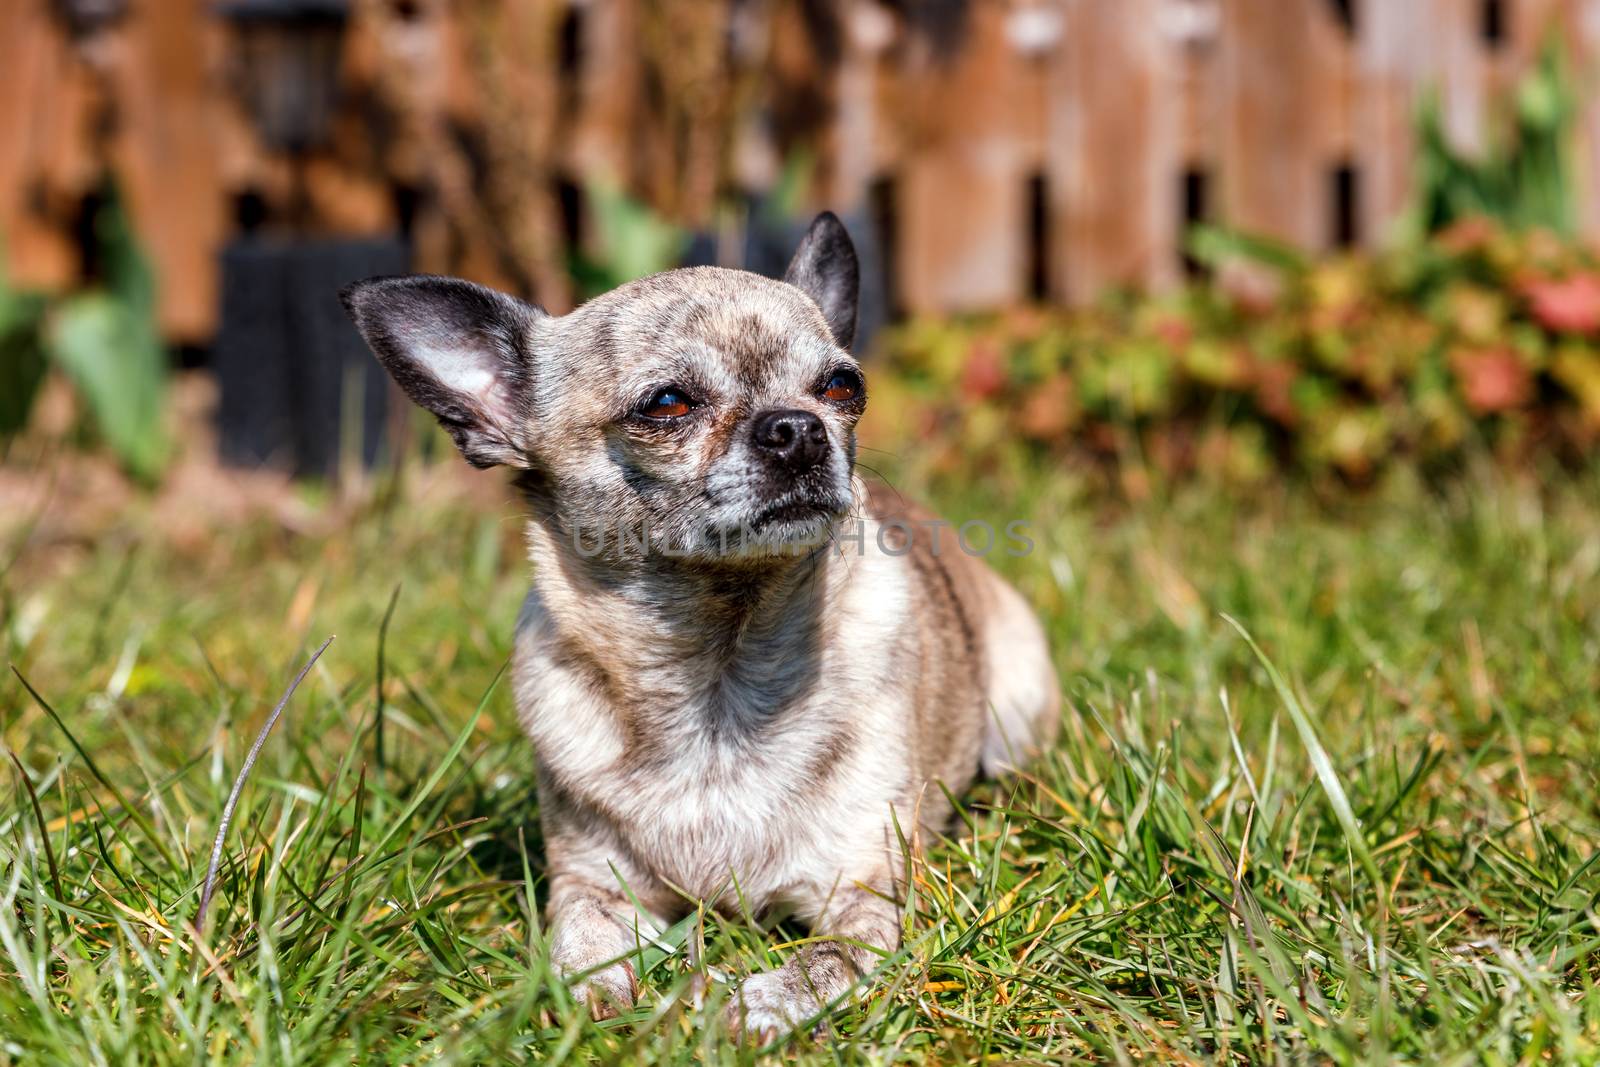 Chihuahua small dog takes sunbathing, enjoys spring weather by seka33